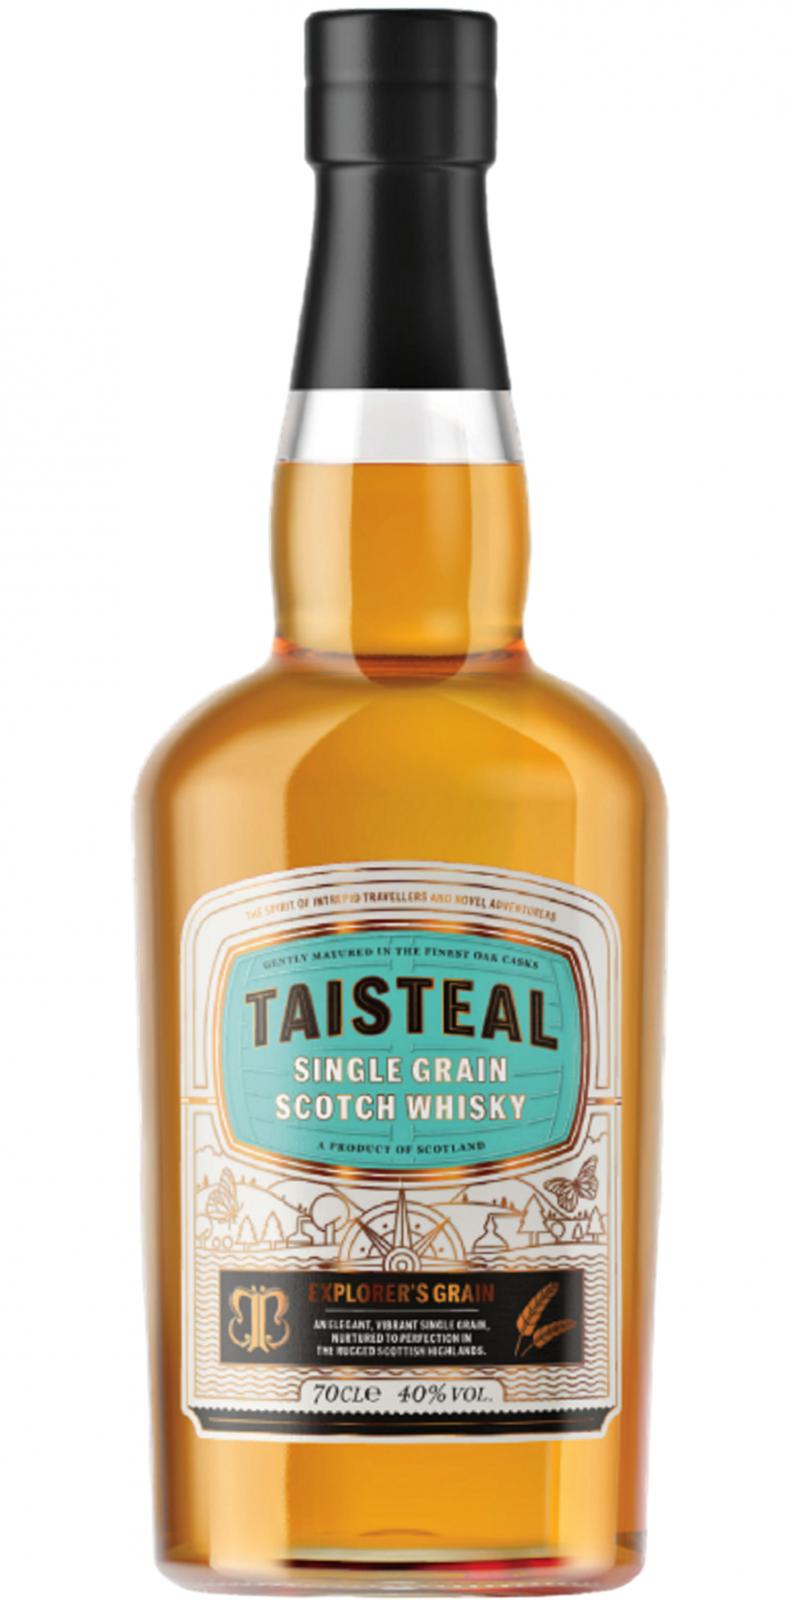 Taisteal Single Grain Scotch Whisky Explorer's Grain Milestone Beverages Hong Kong 40% 700ml